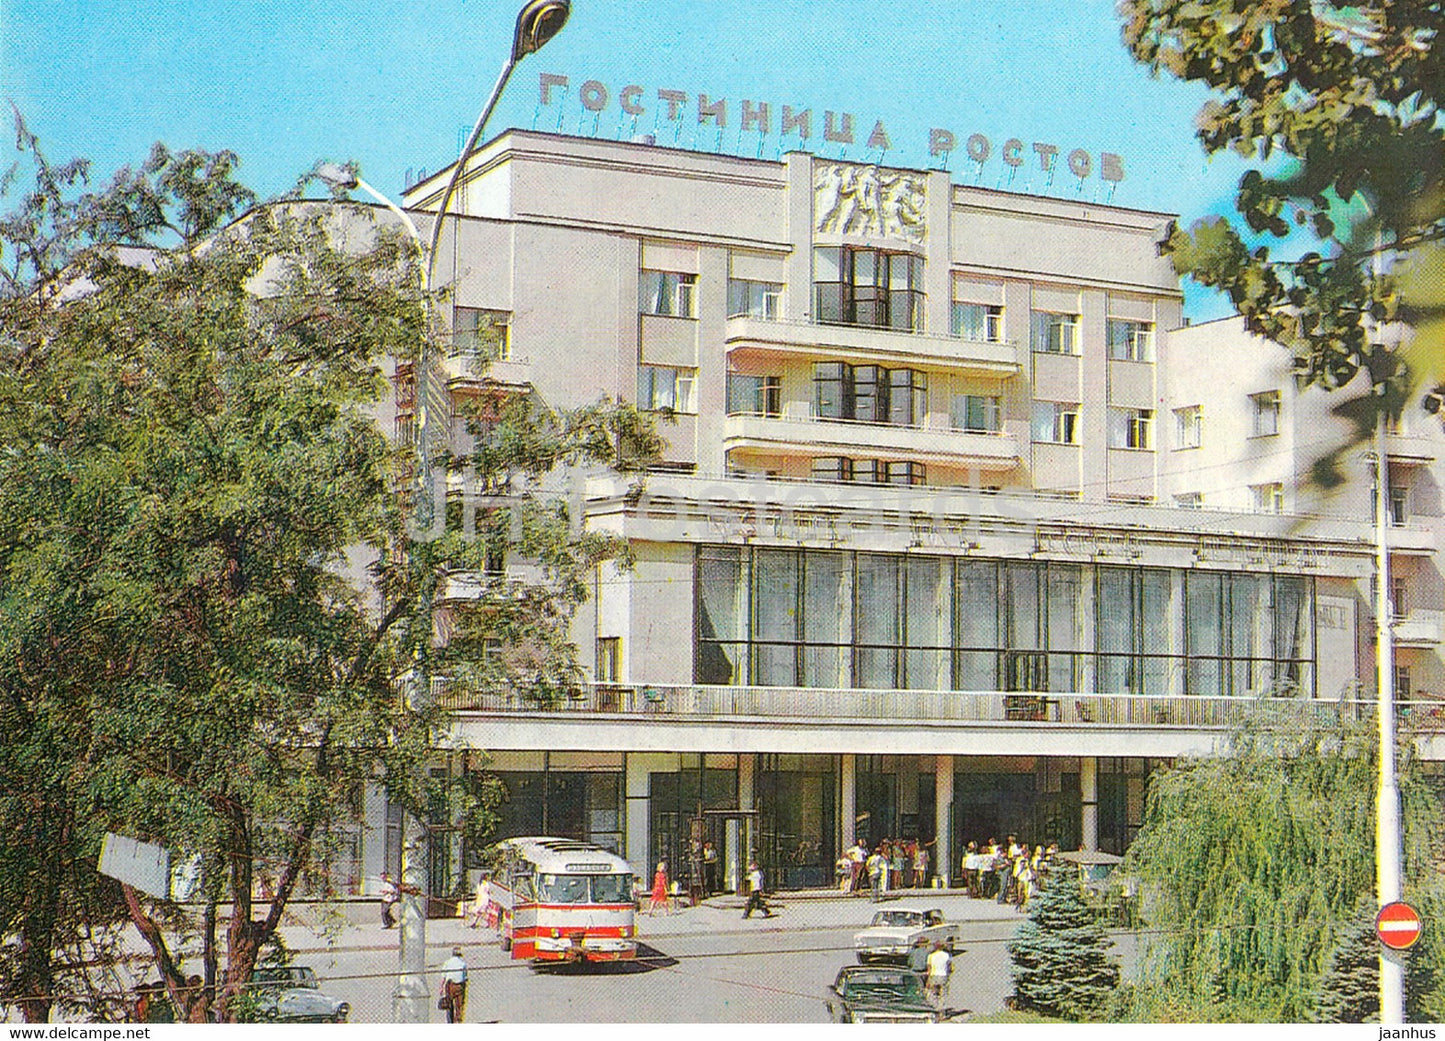 Rostov-on-Don - Rostov na Donu - hotel Rostov - bus - 1 - postal stationery - 1981 - Russia USSR - unused - JH Postcards